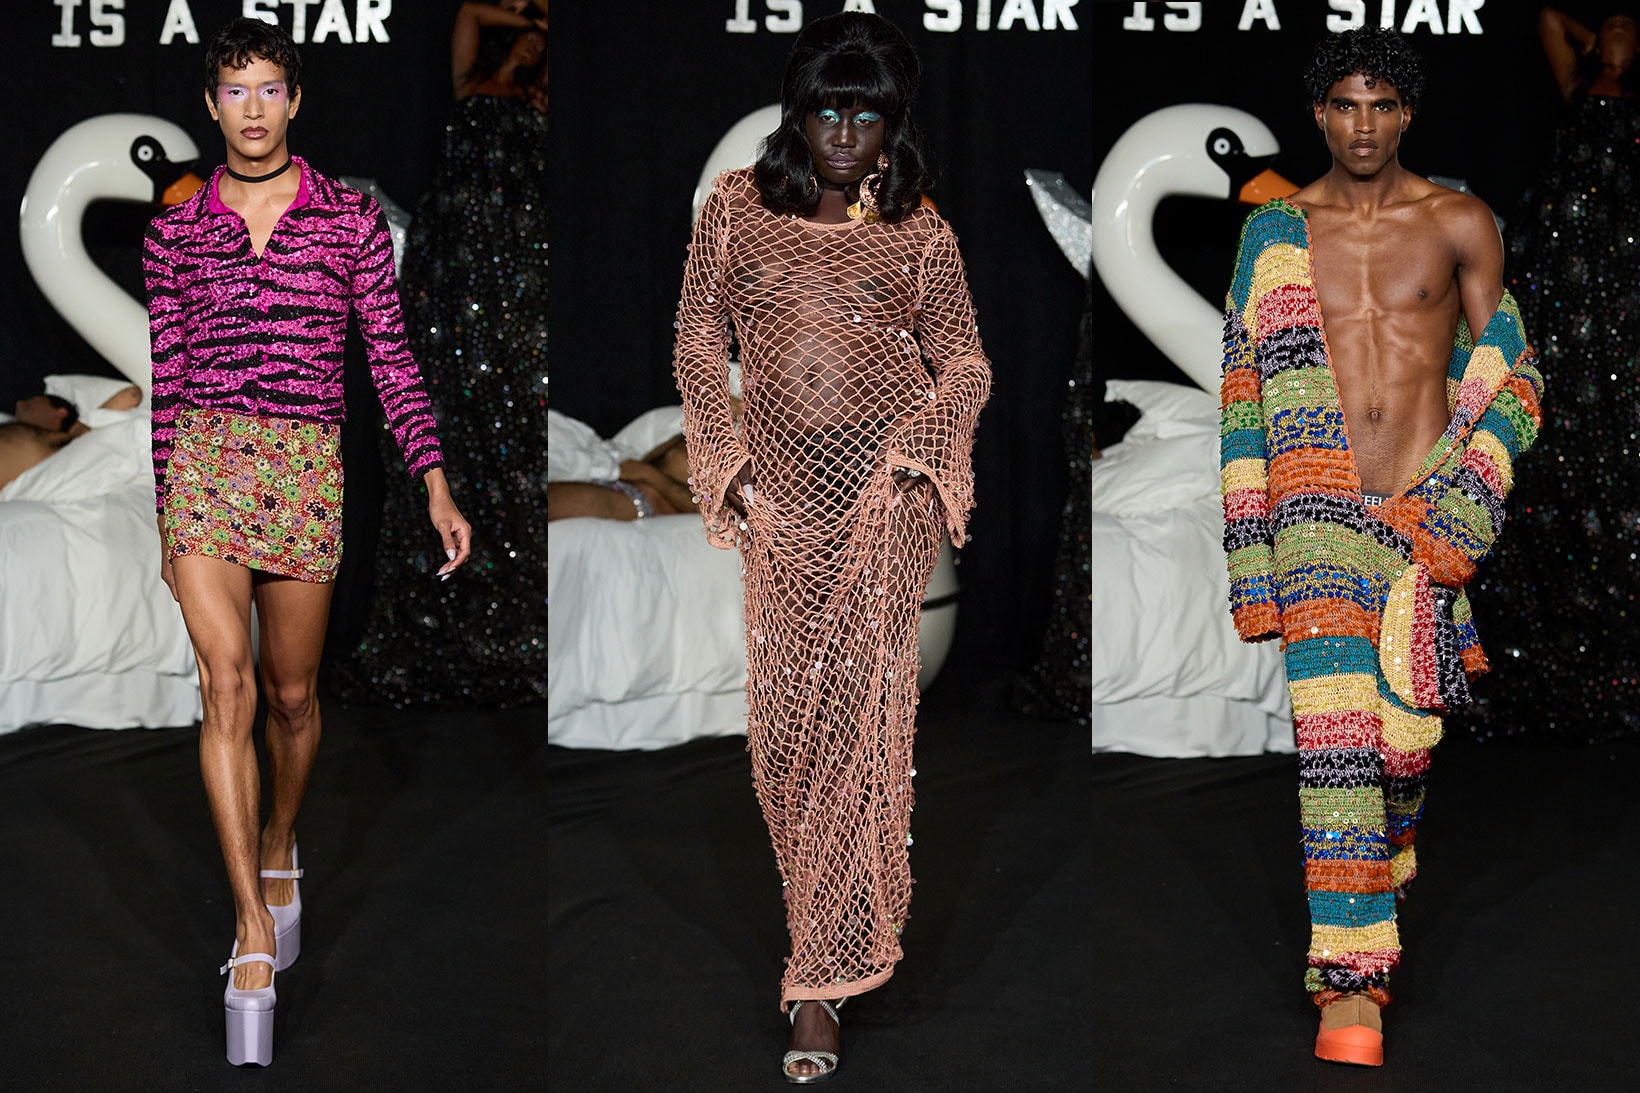 ashish gupta london fashion week sequins color runway show drag queens